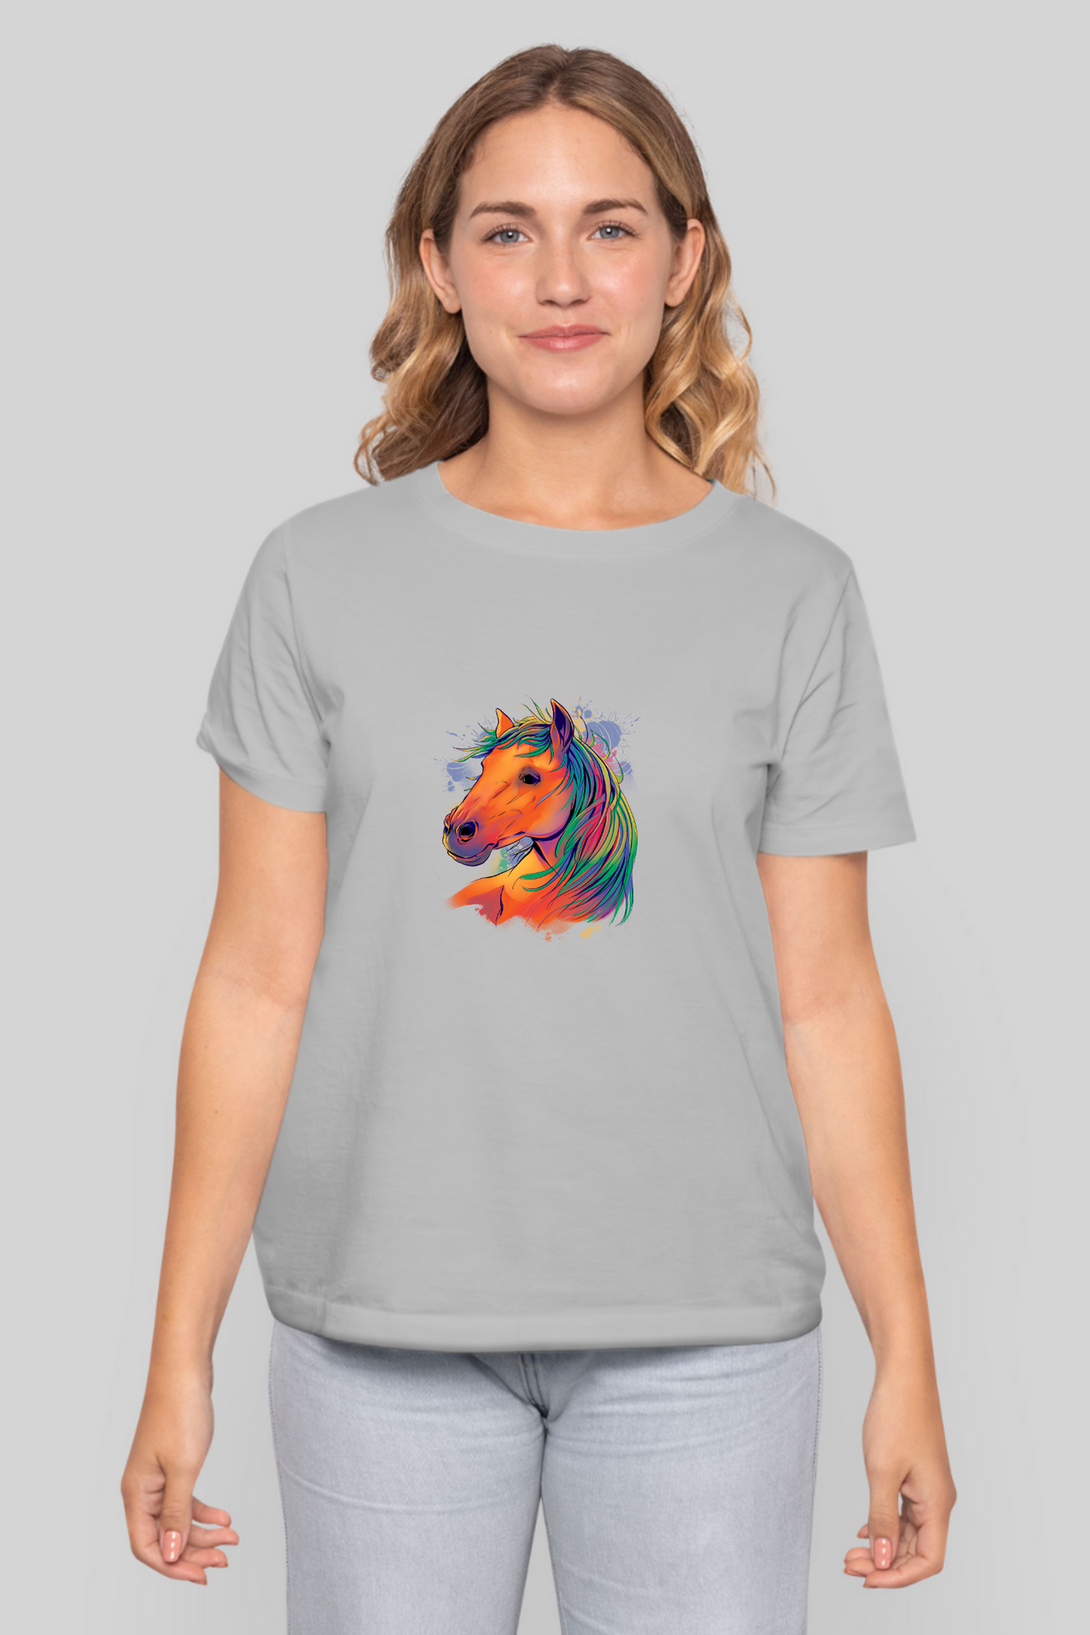 Horse Art Printed T-Shirt For Women - WowWaves - 11